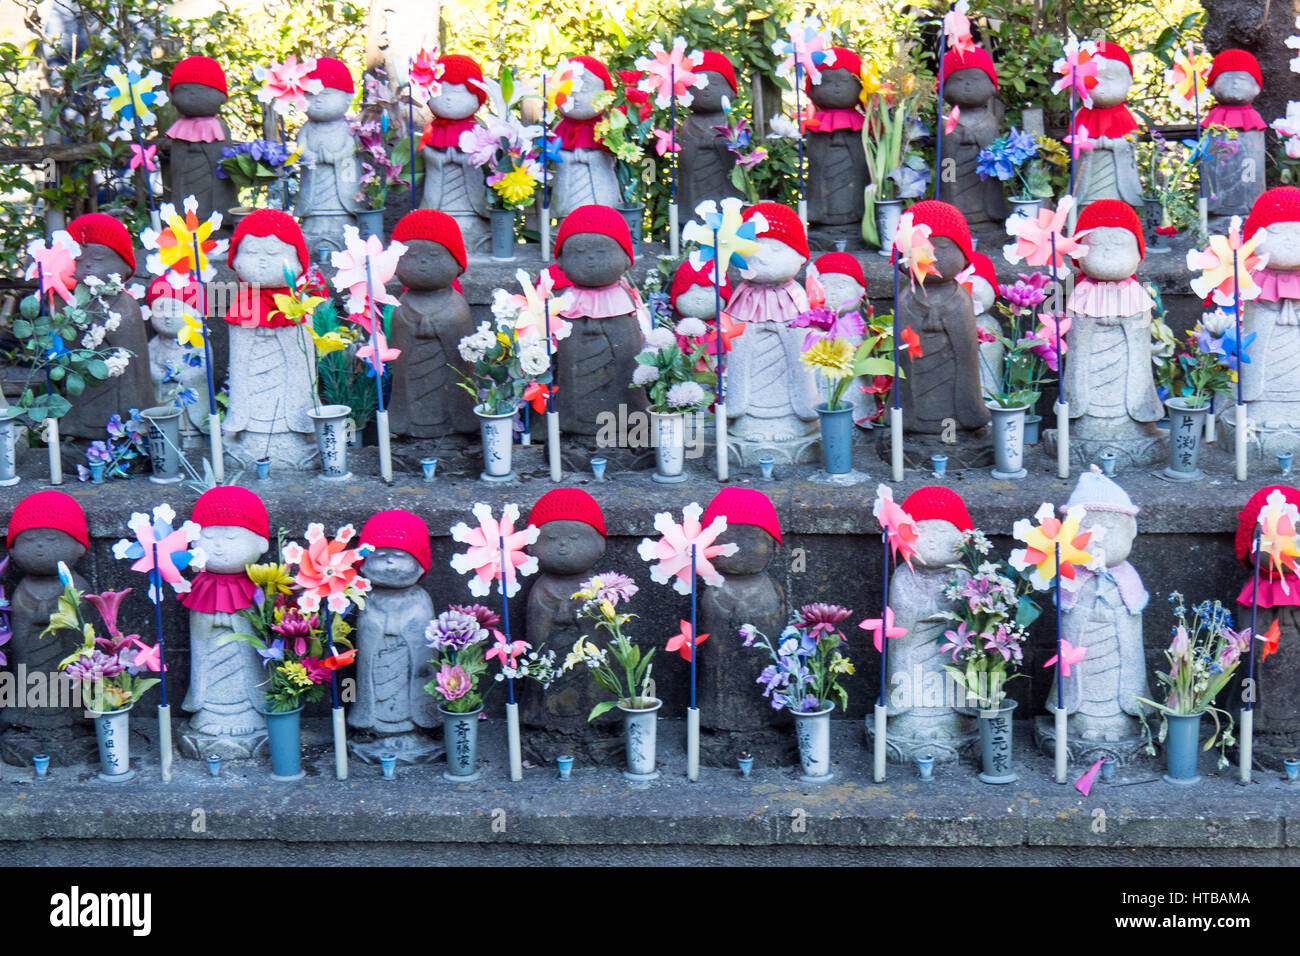 Unborn Children Garden, rows of stone Jizō statues of children representing unborn children in the cemetery at Zōjō-ji temple, Tokyo. Stock Photo